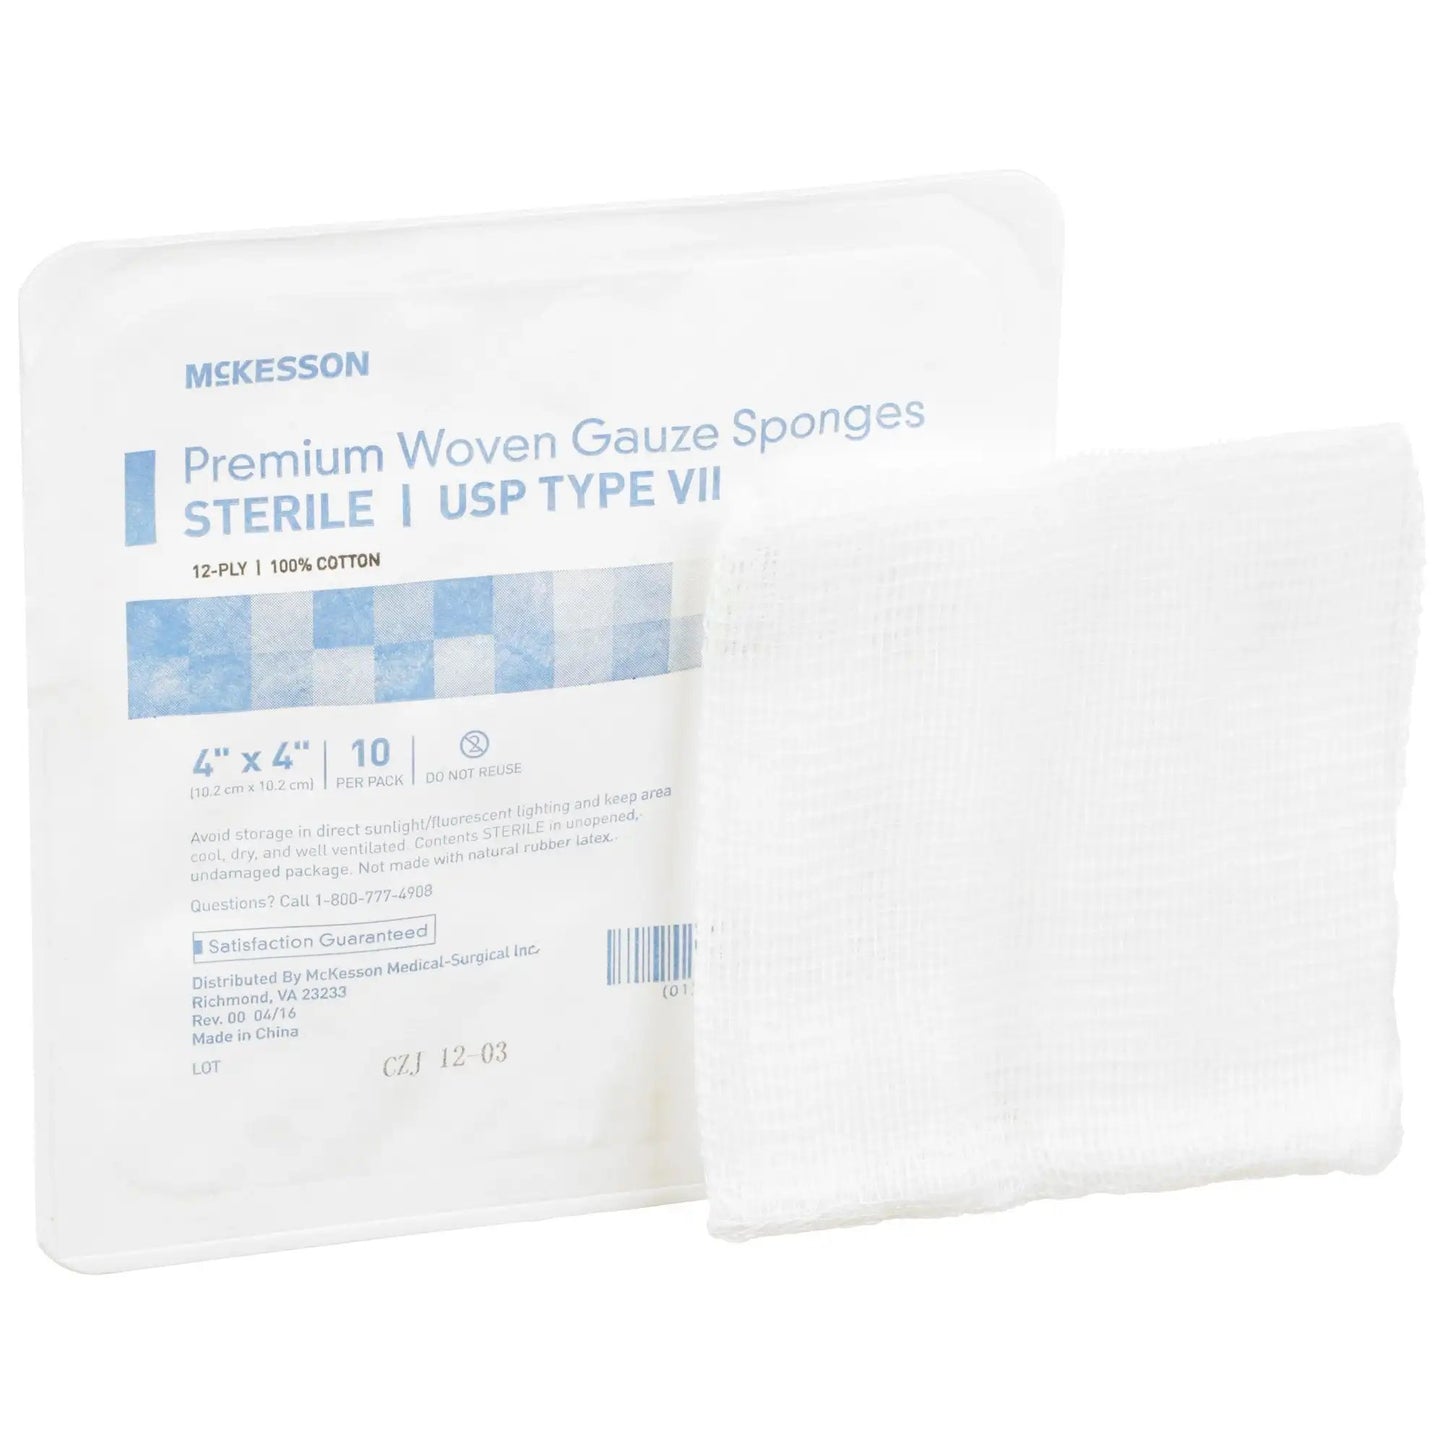 McKesson Sterile USP Type VII Cotton Gauze Sponge, 4 x 4 Inch, 10-Pack